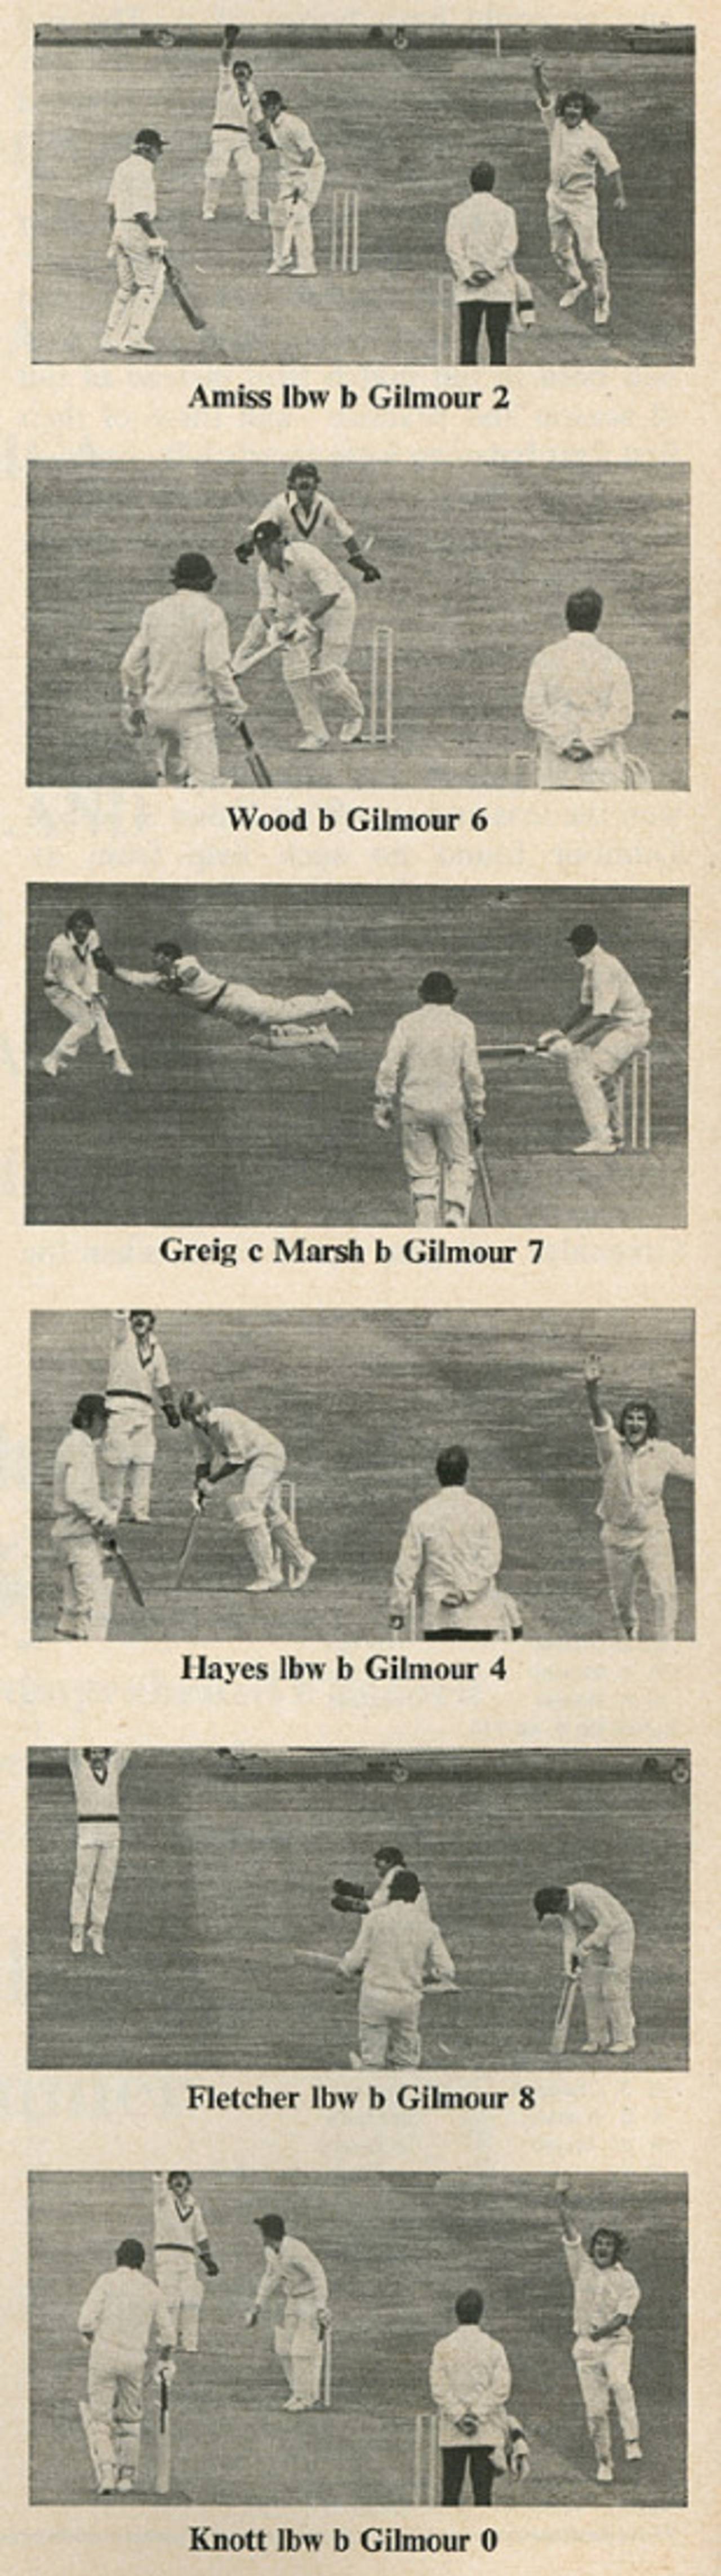 Gary Gilmour's 6 for 14 against England in the 1975 World Cup semi-final&nbsp;&nbsp;&bull;&nbsp;&nbsp;The Cricketer International